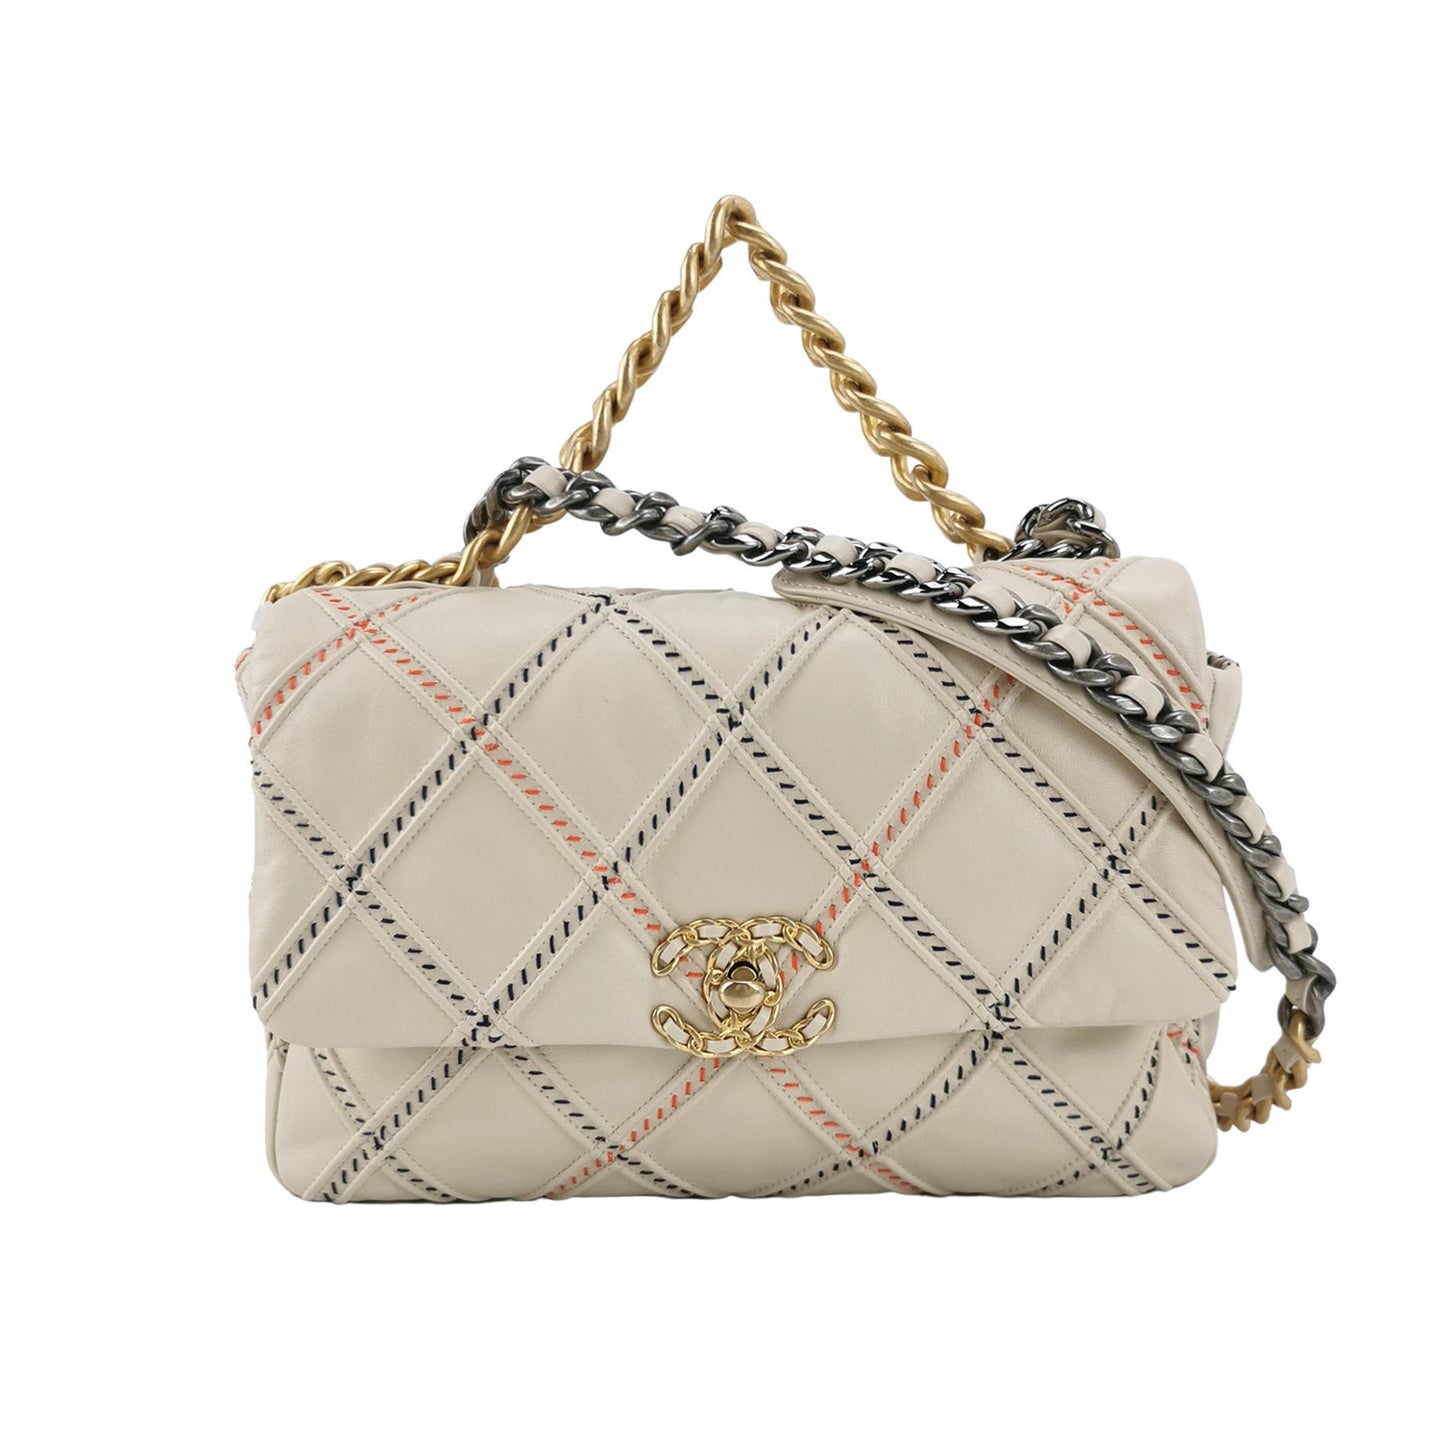 Chanel 19 Bag 2021 Cream White Wild Stitch-Luxbags